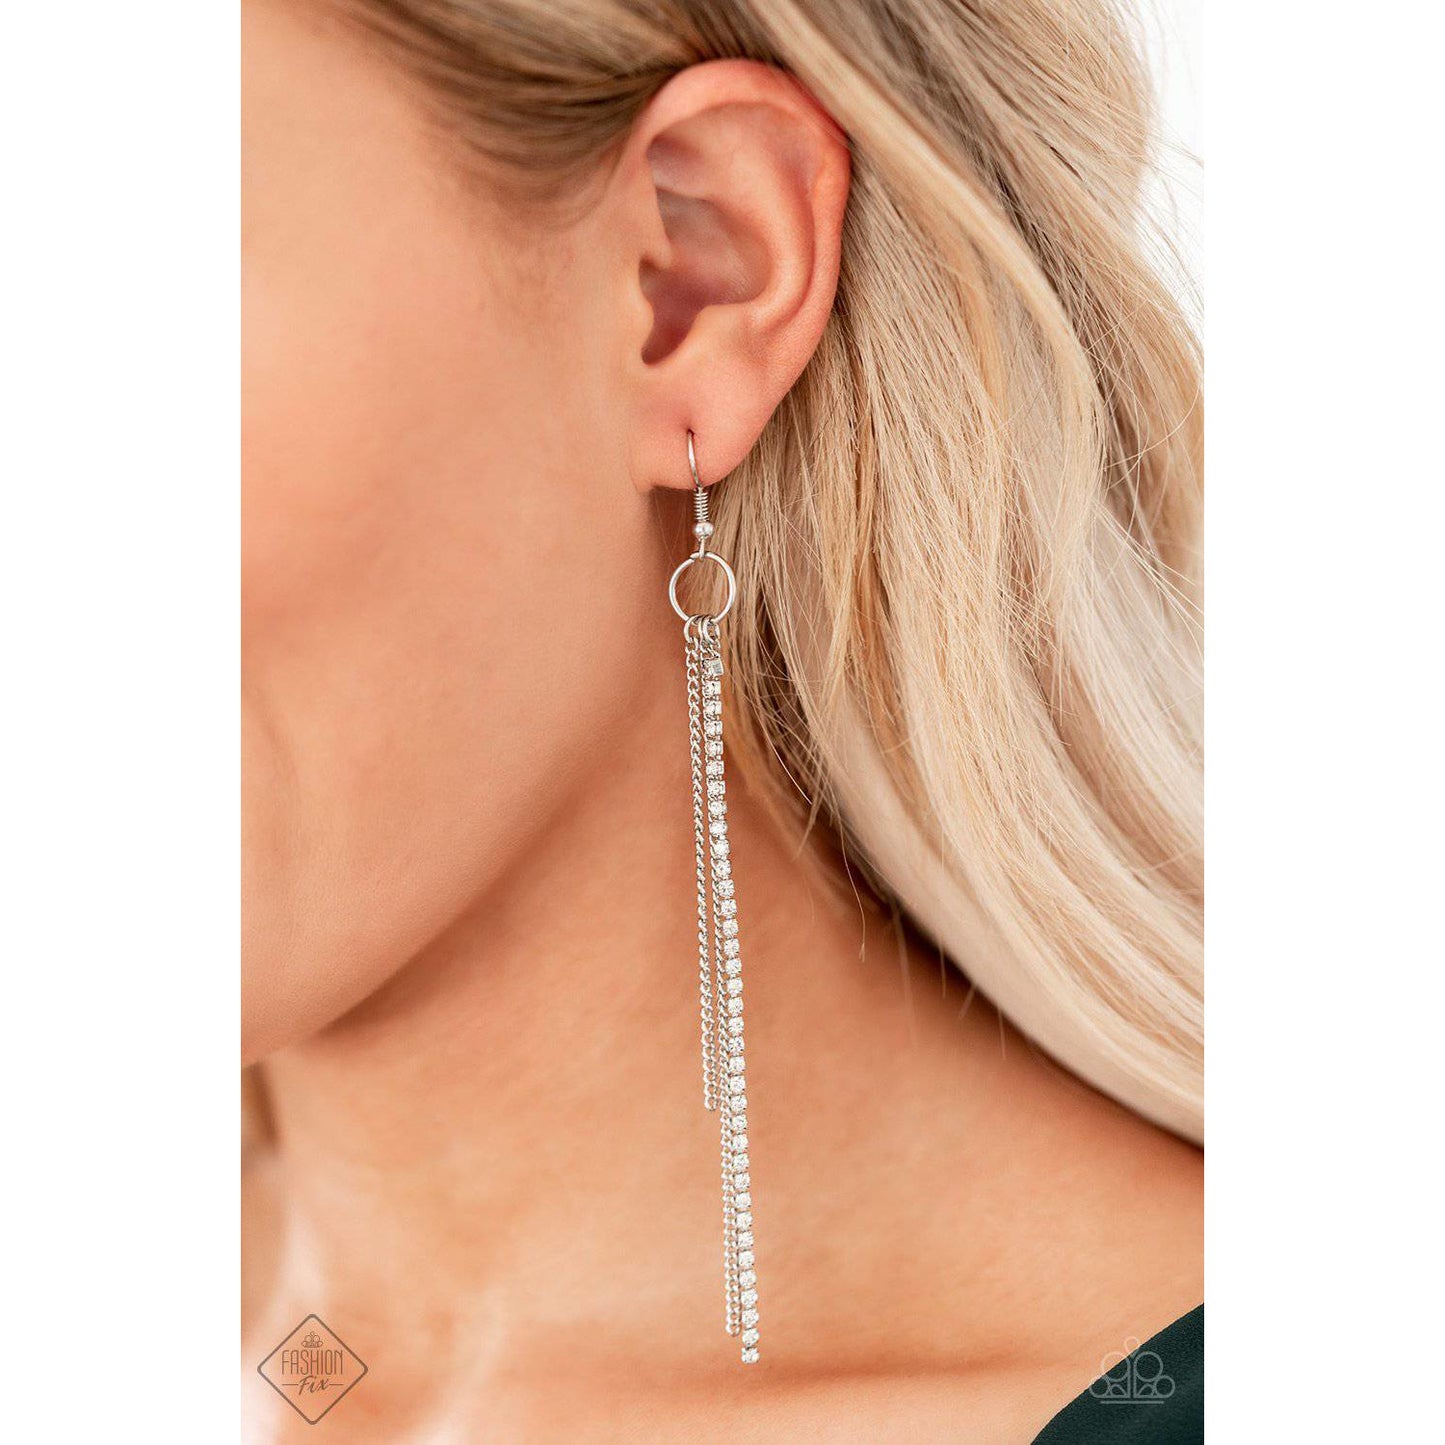 7 Days a SLEEK - White Rhinestone Earrings - Paparazzi Accessories - GlaMarous Titi Jewels